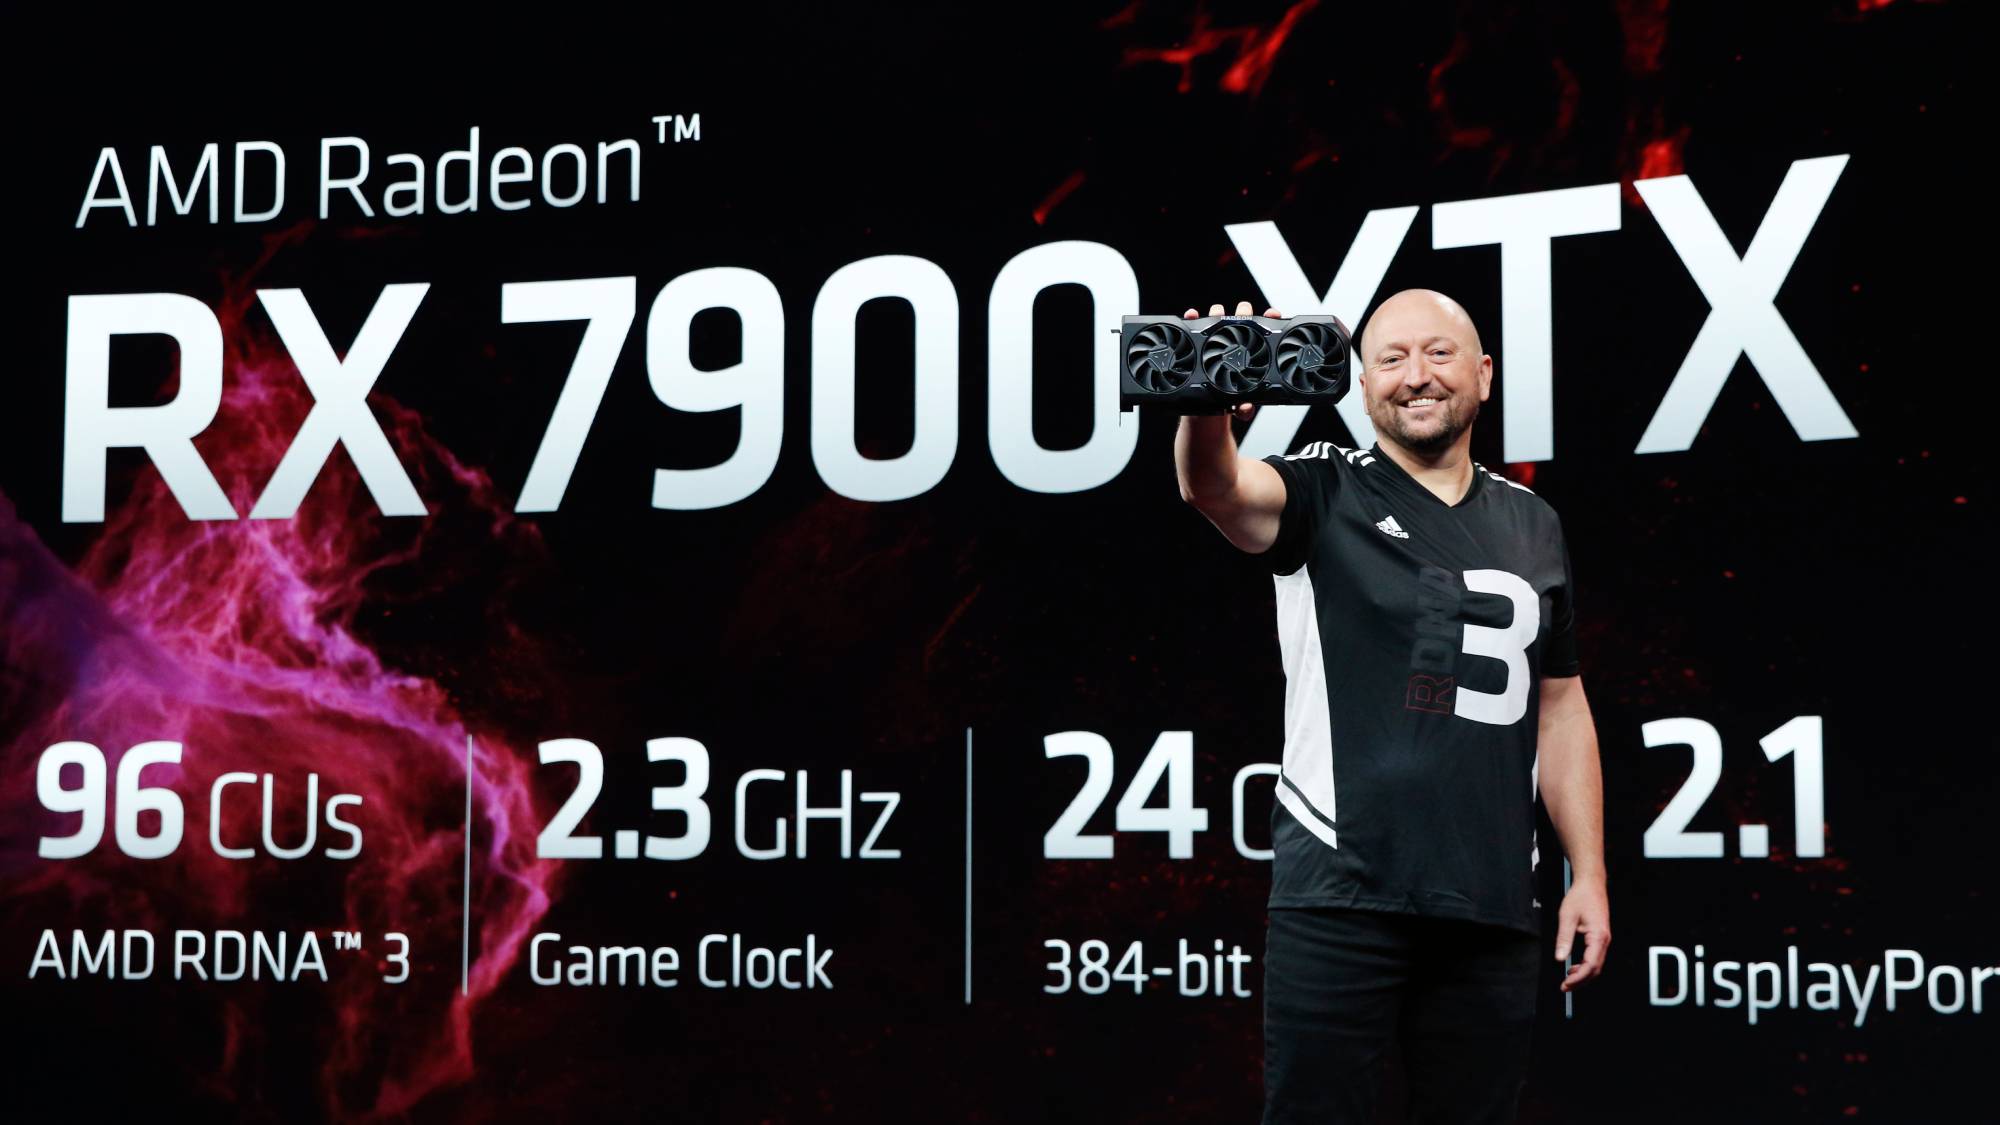 AMD's Scott Herkelmann holding the Radeon RX 7900 XTX graphics card